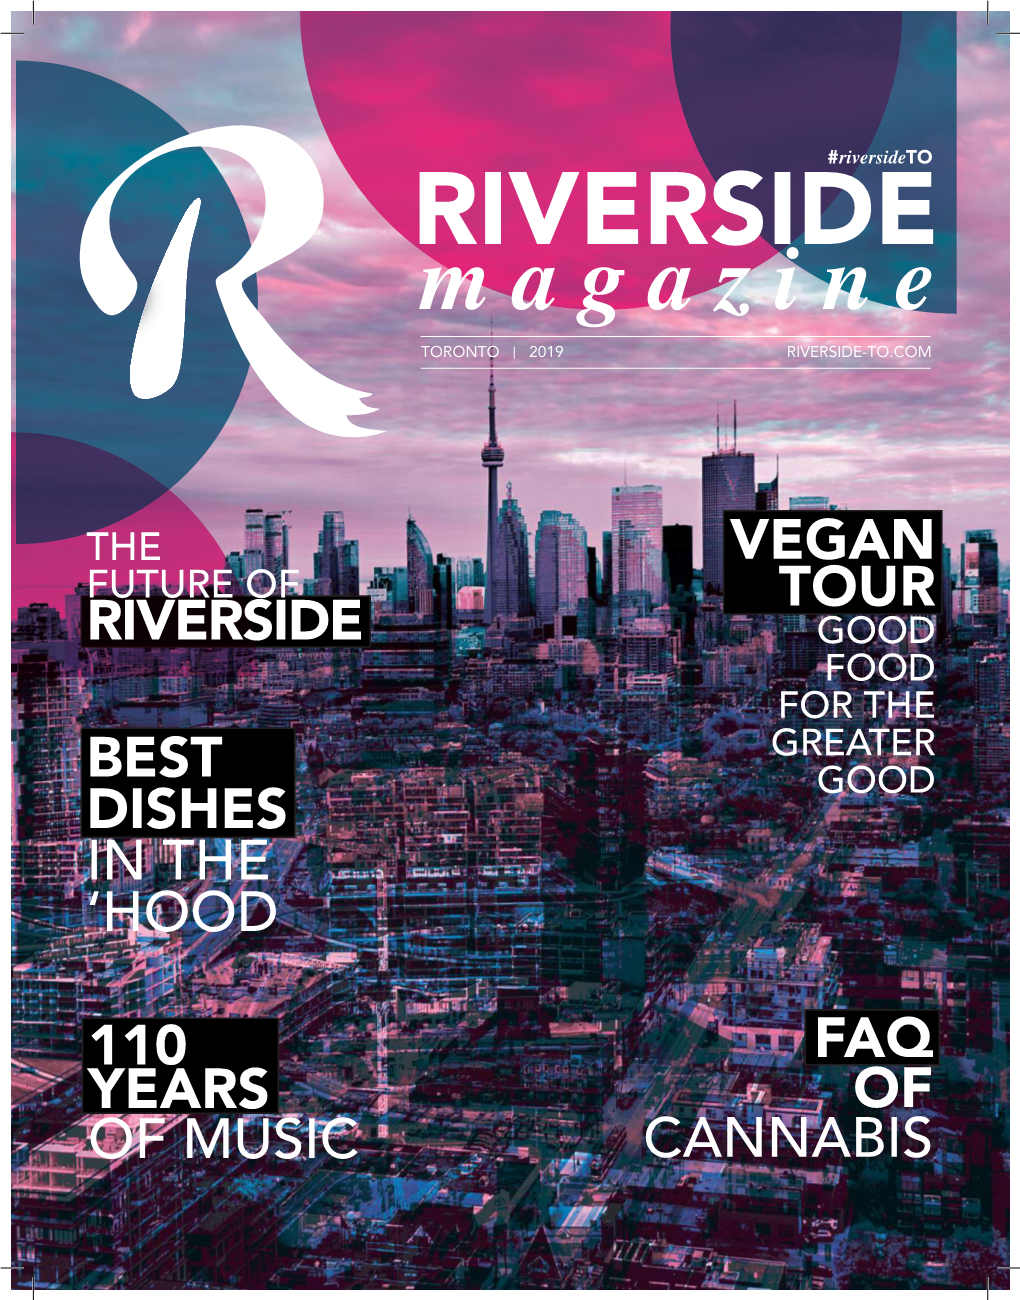 RIVERSIDE#Riversideto